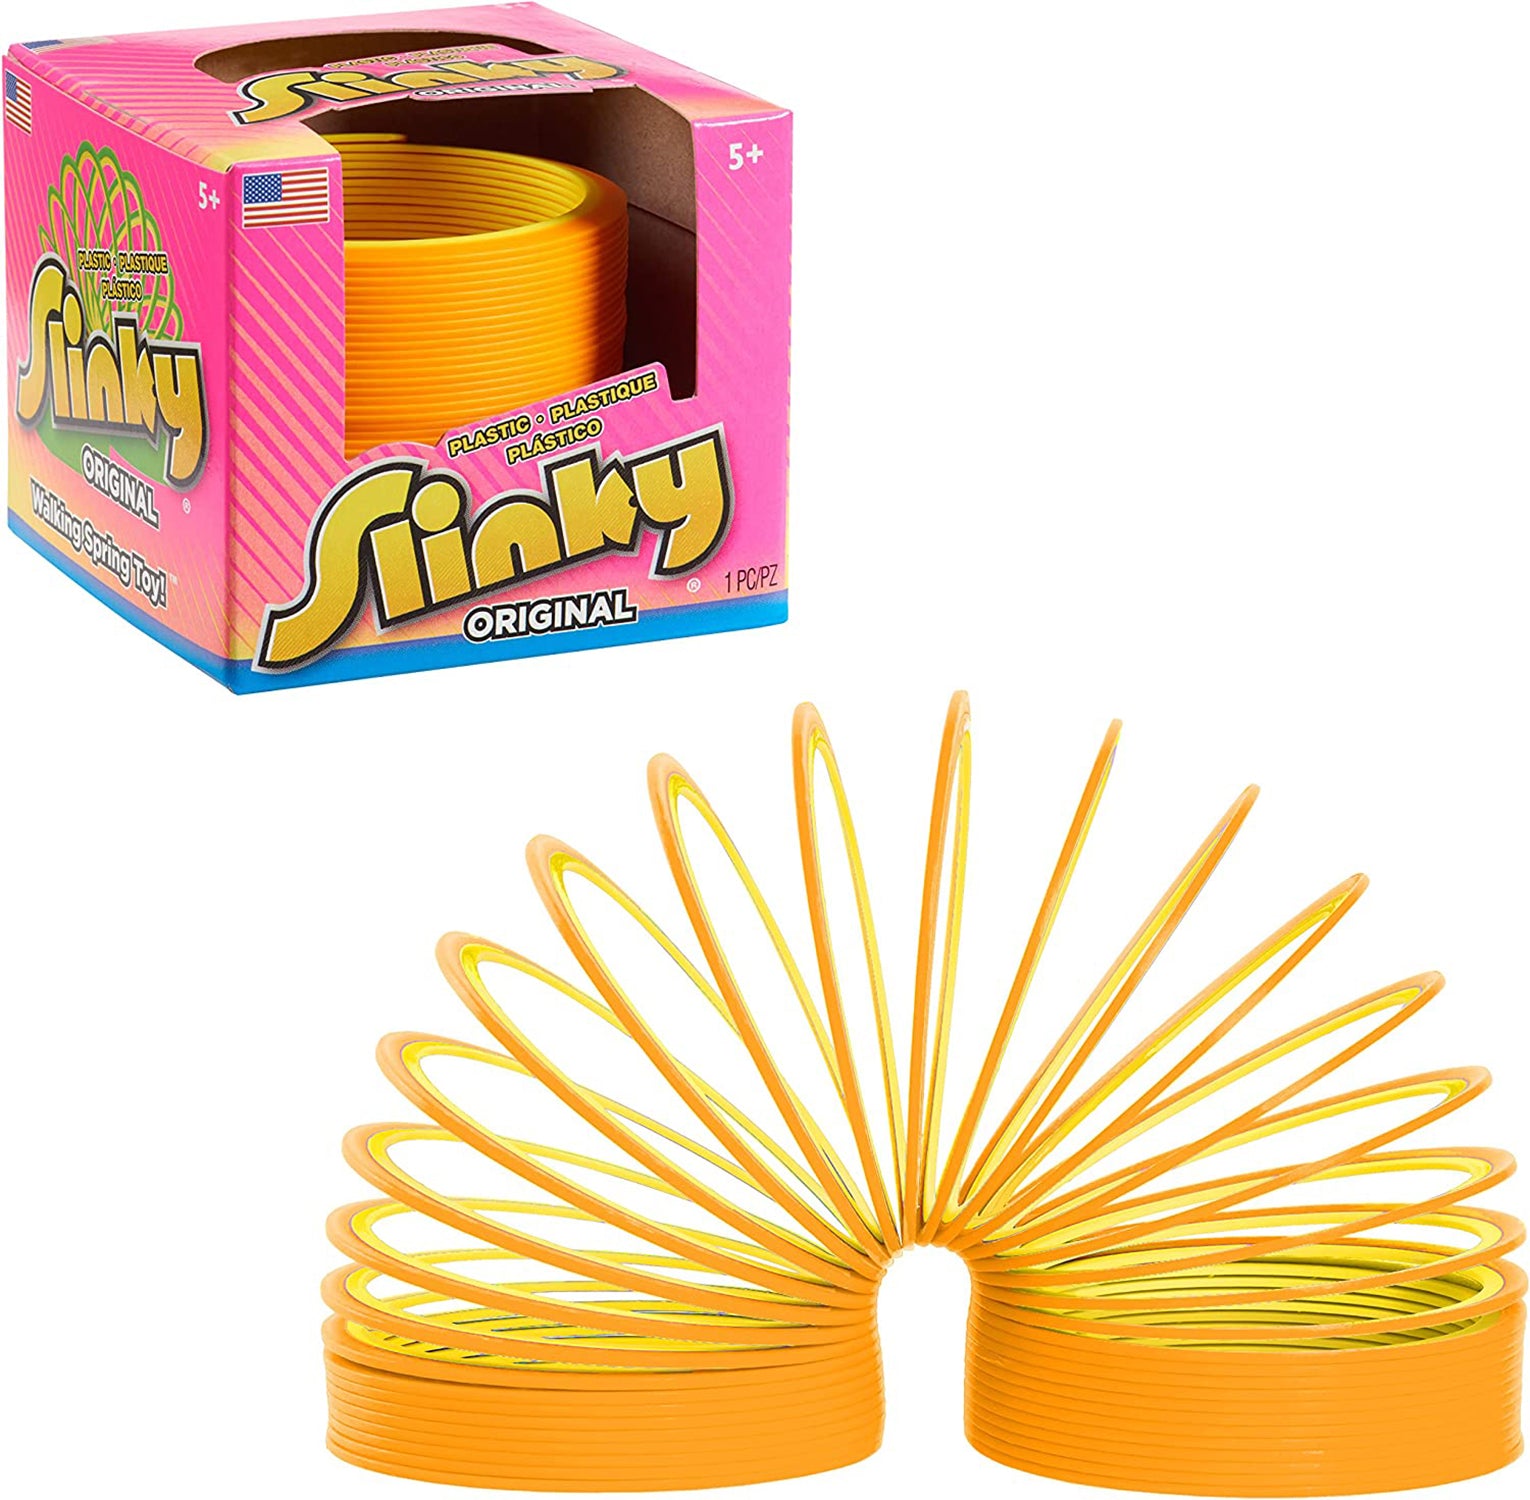 Slinky The Original Walking Spring Toy